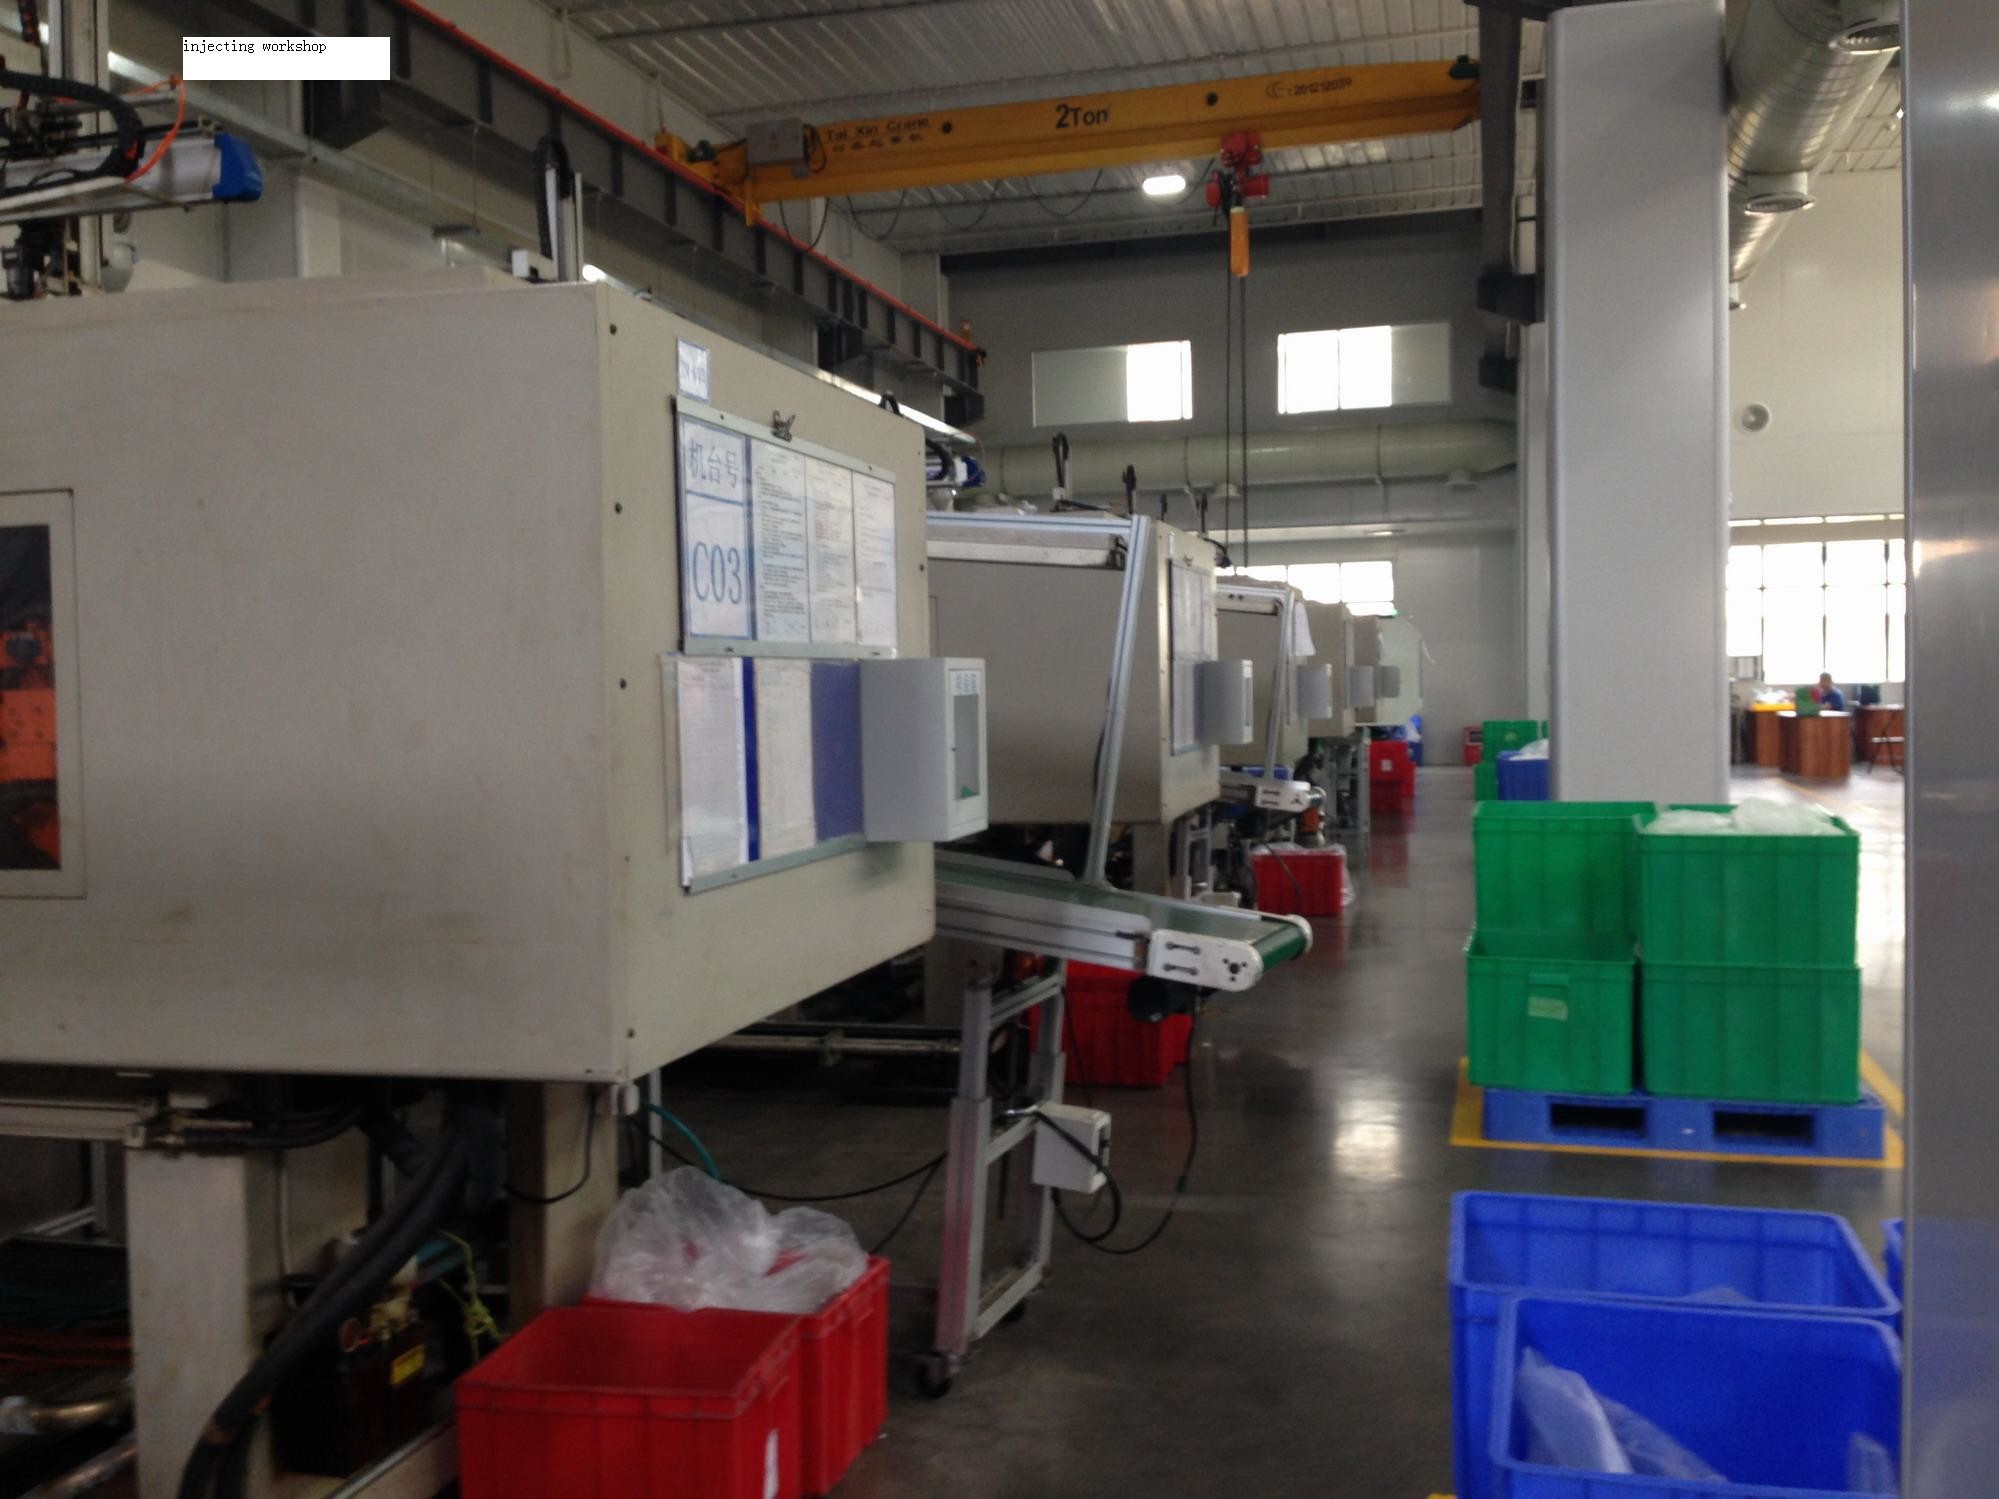 China Dongguan Sanrong Daily Chemical Container Co., Ltd Bedrijfsprofiel